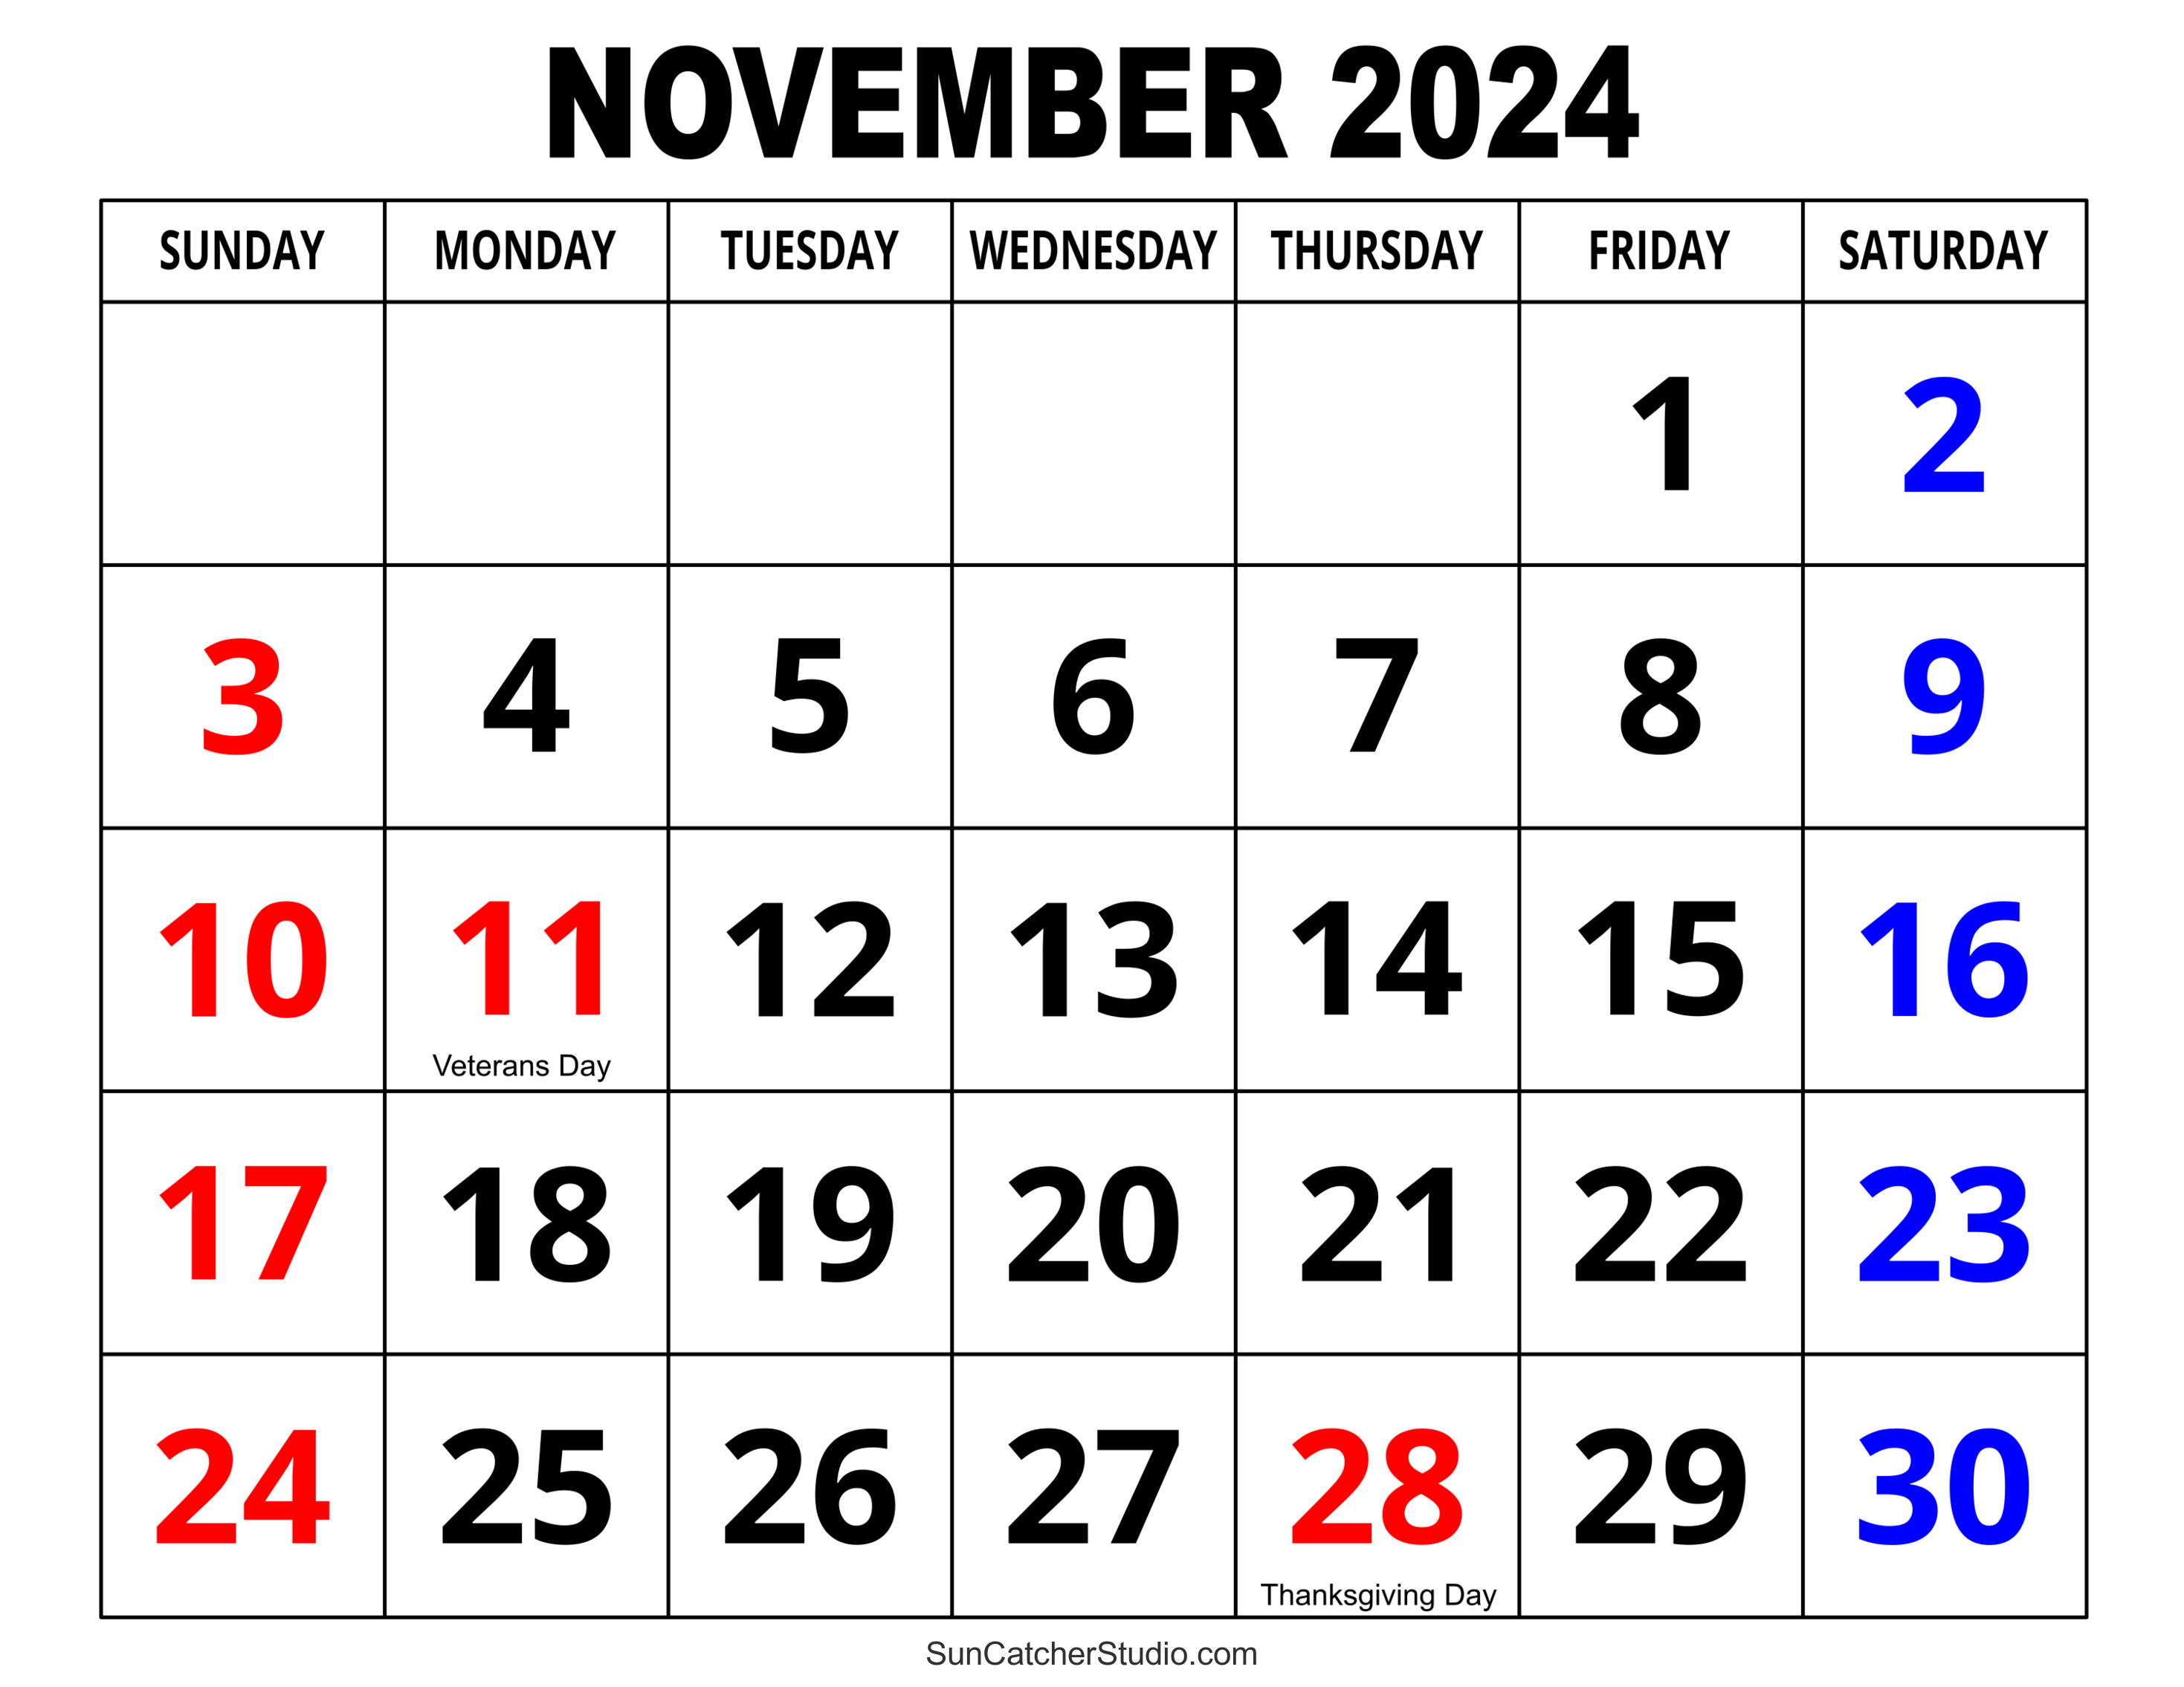 November 2024 Calendars (52 Free Printable PDFs)